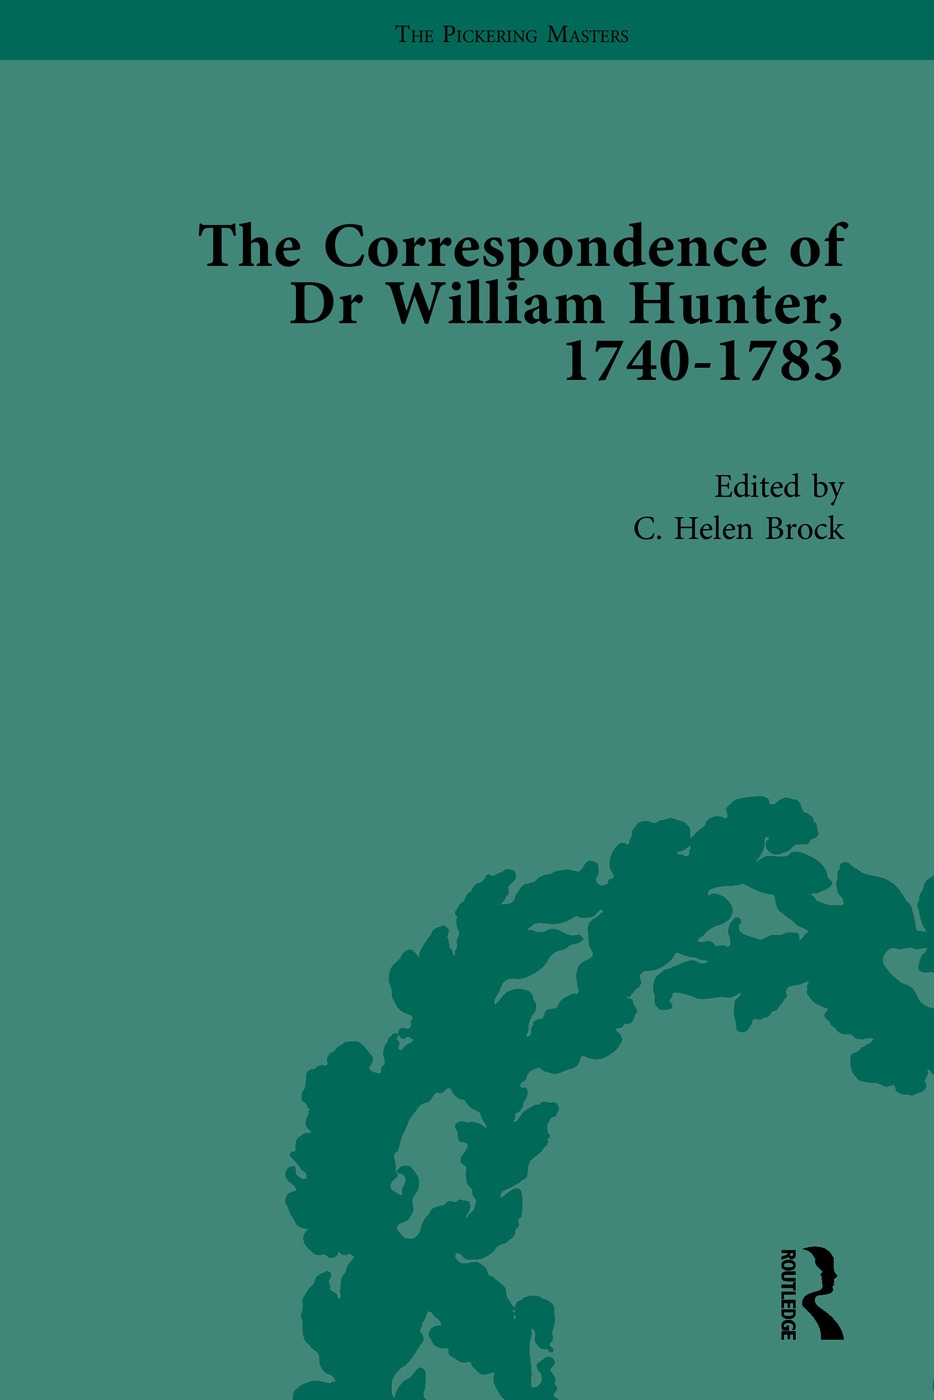 Correspondence of Dr. William Hunter